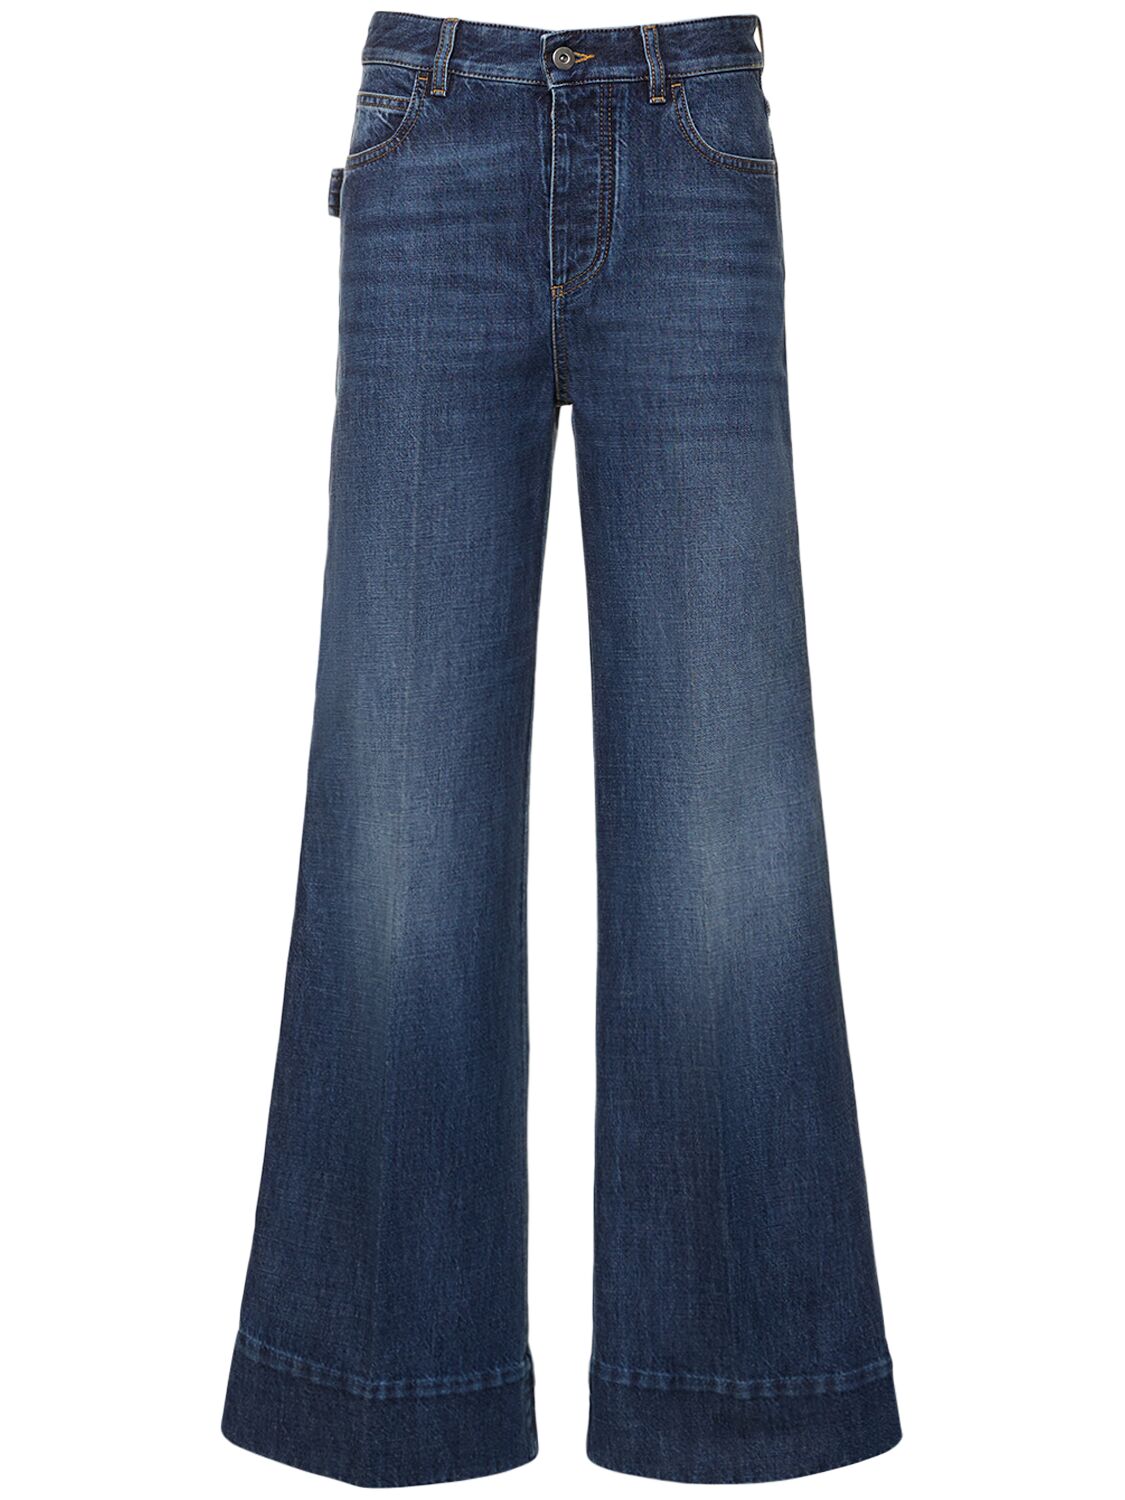 Image of Medium Washed Denim Jeans